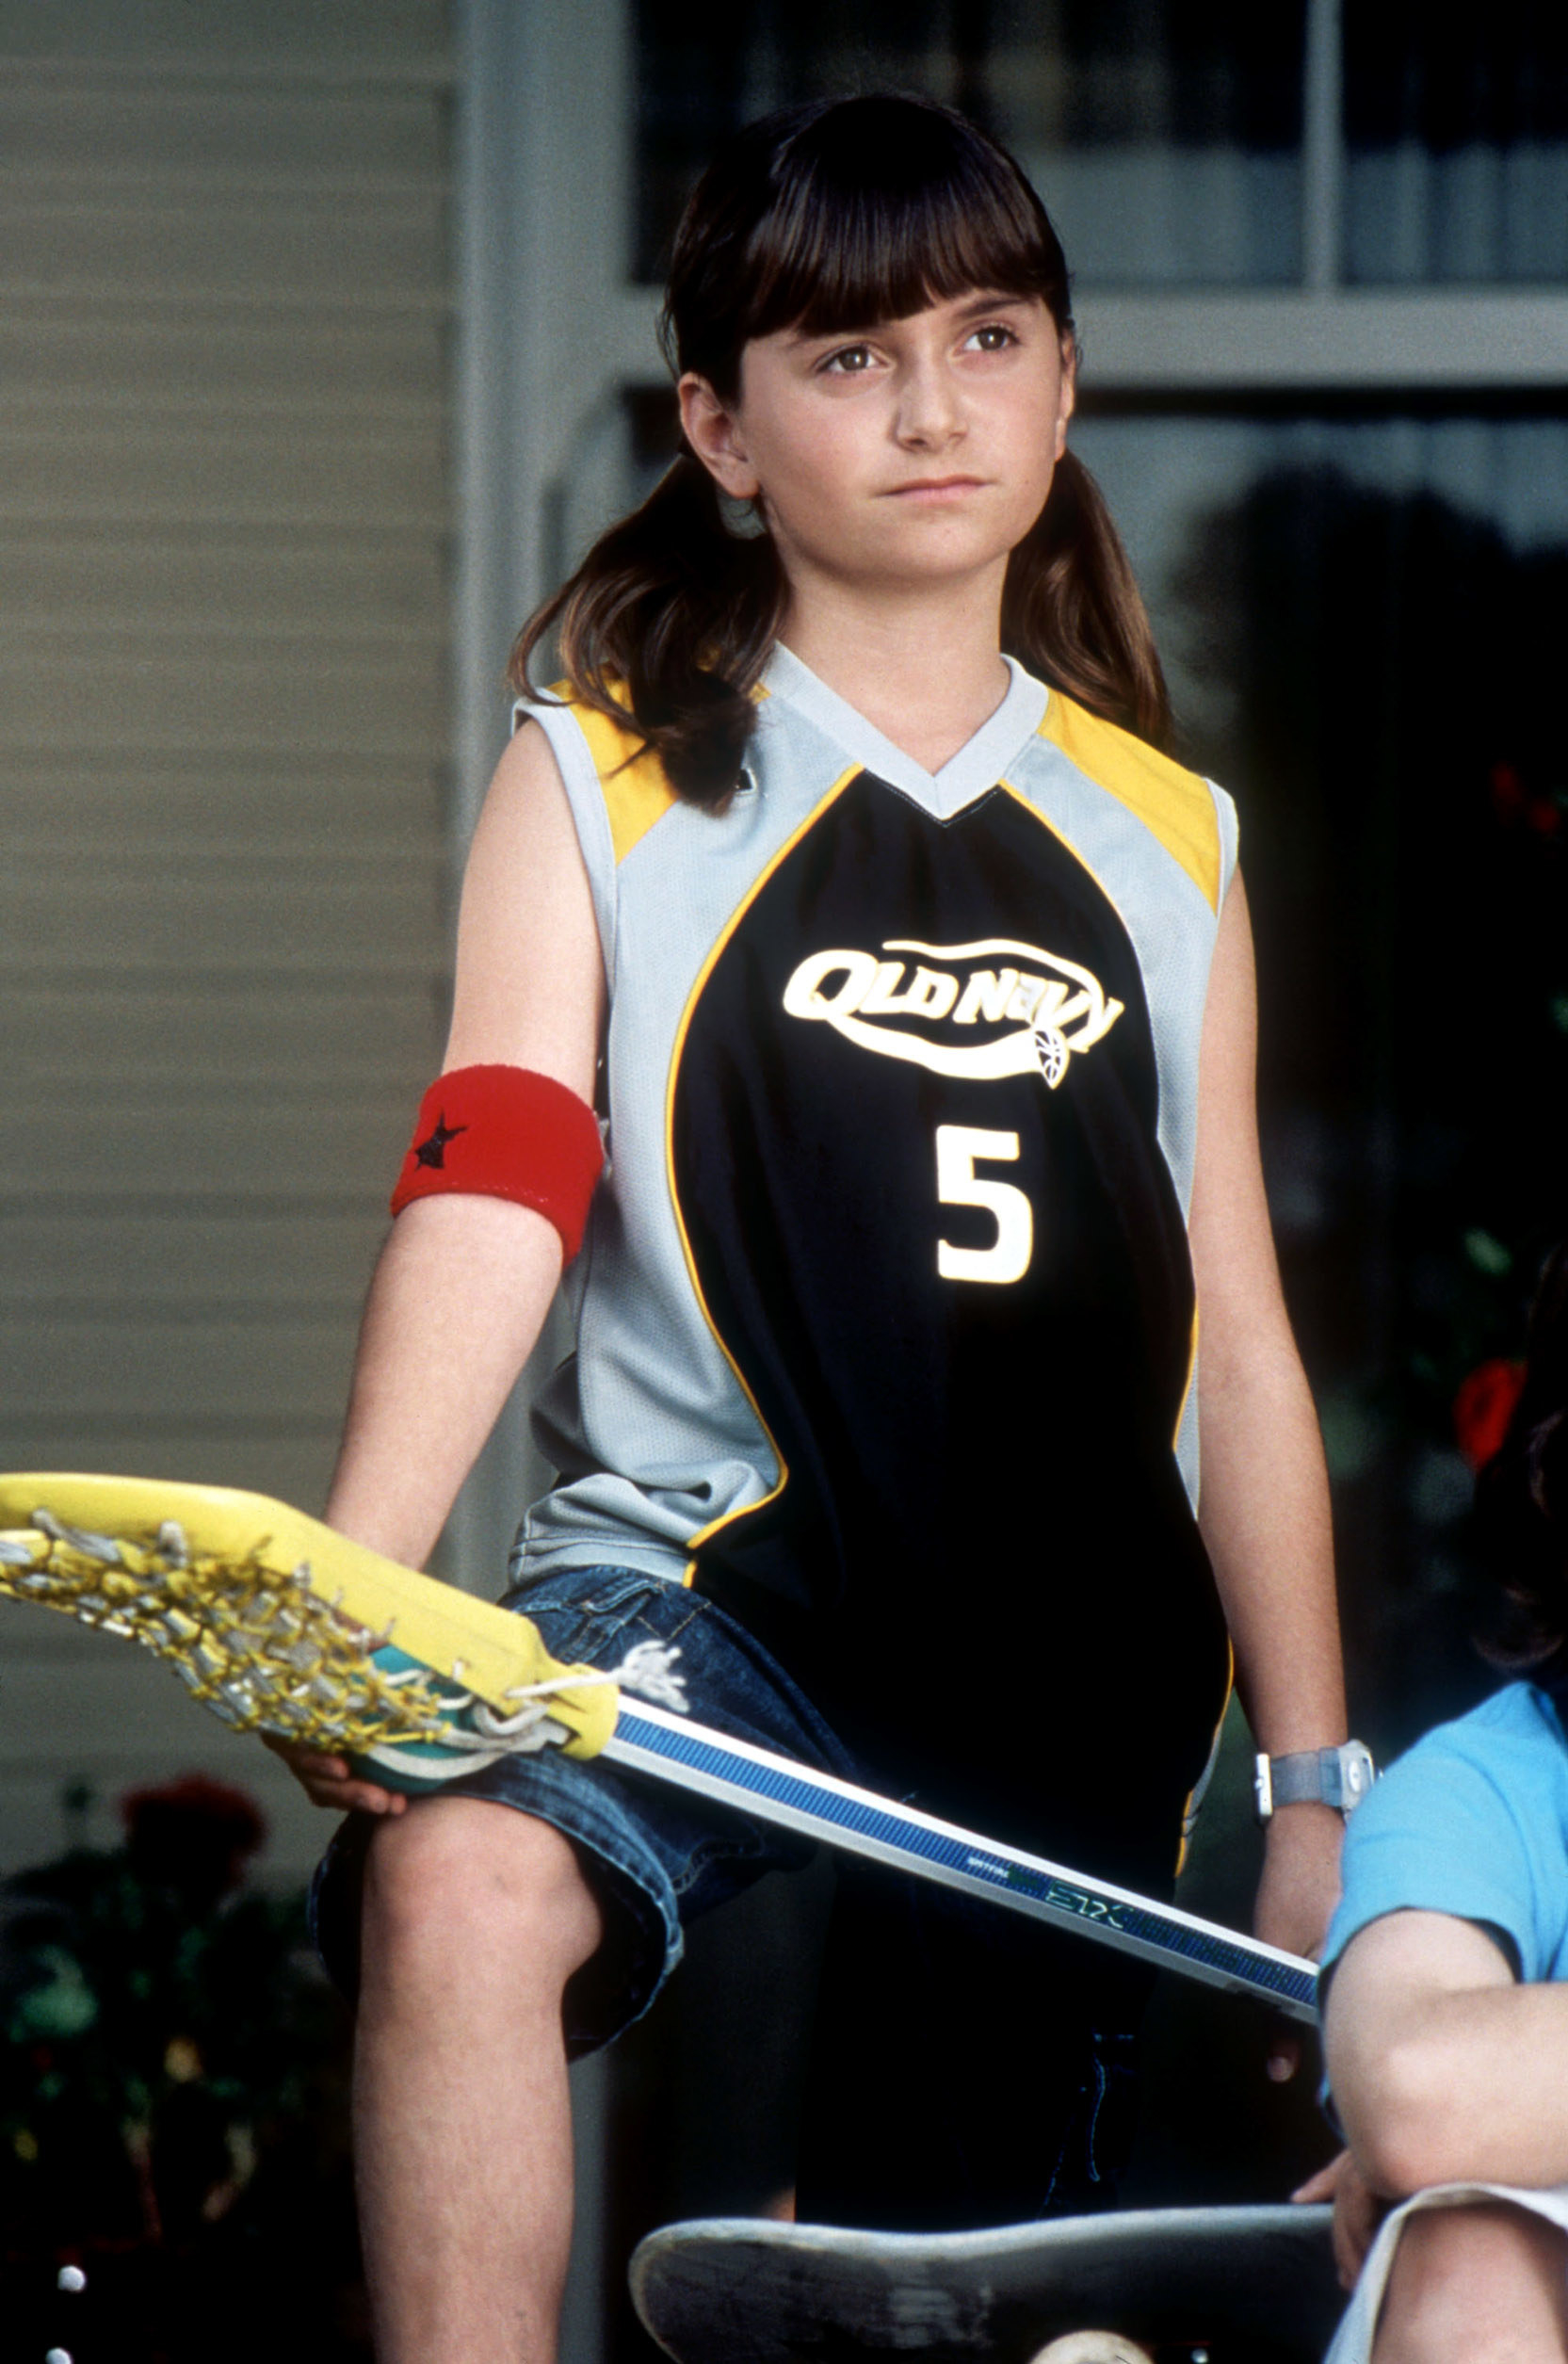 Sarah holding a lacrosse stick